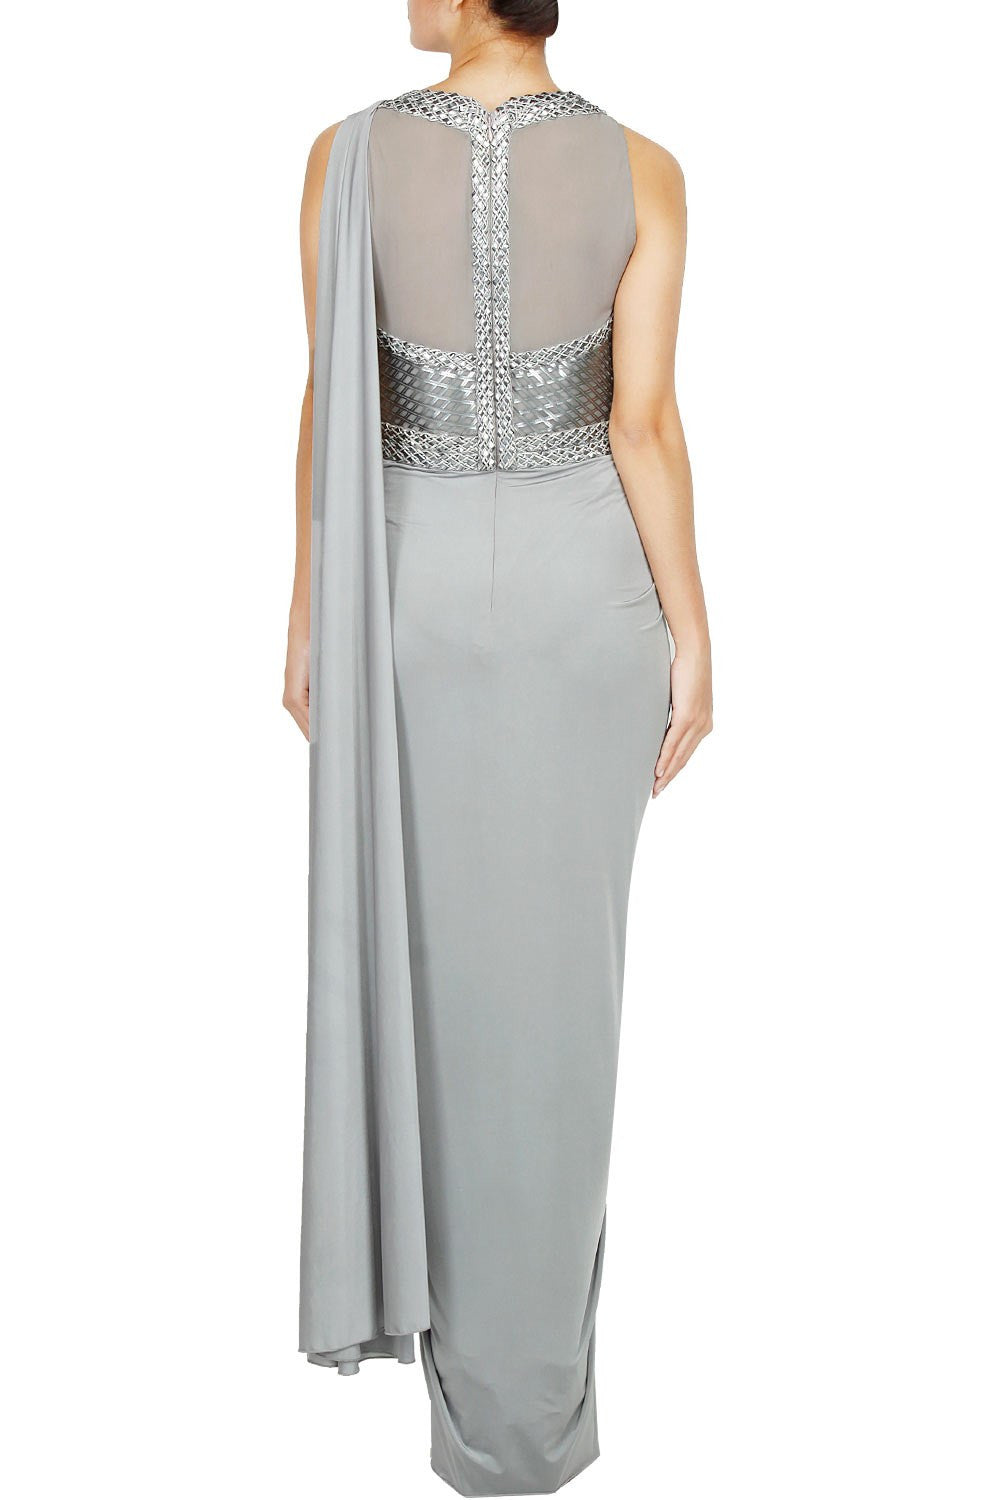 Grey color saree gown